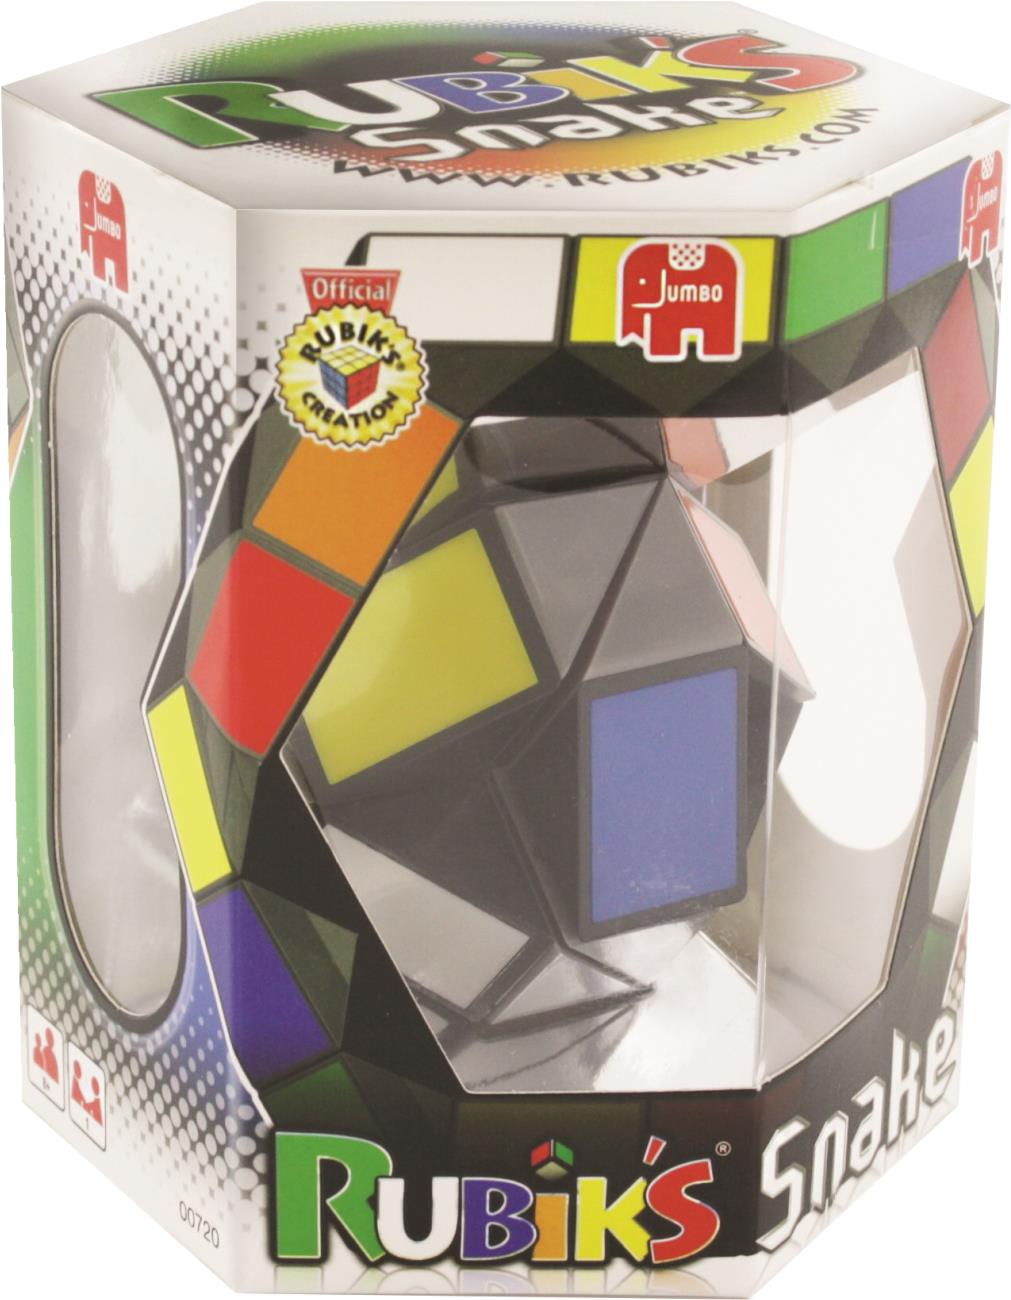 Jumbo Rubik's Snake - Mehrfarben - 8 Jahr(e) - Junge/Mädchen - 30 min - China - 132 mm (720)